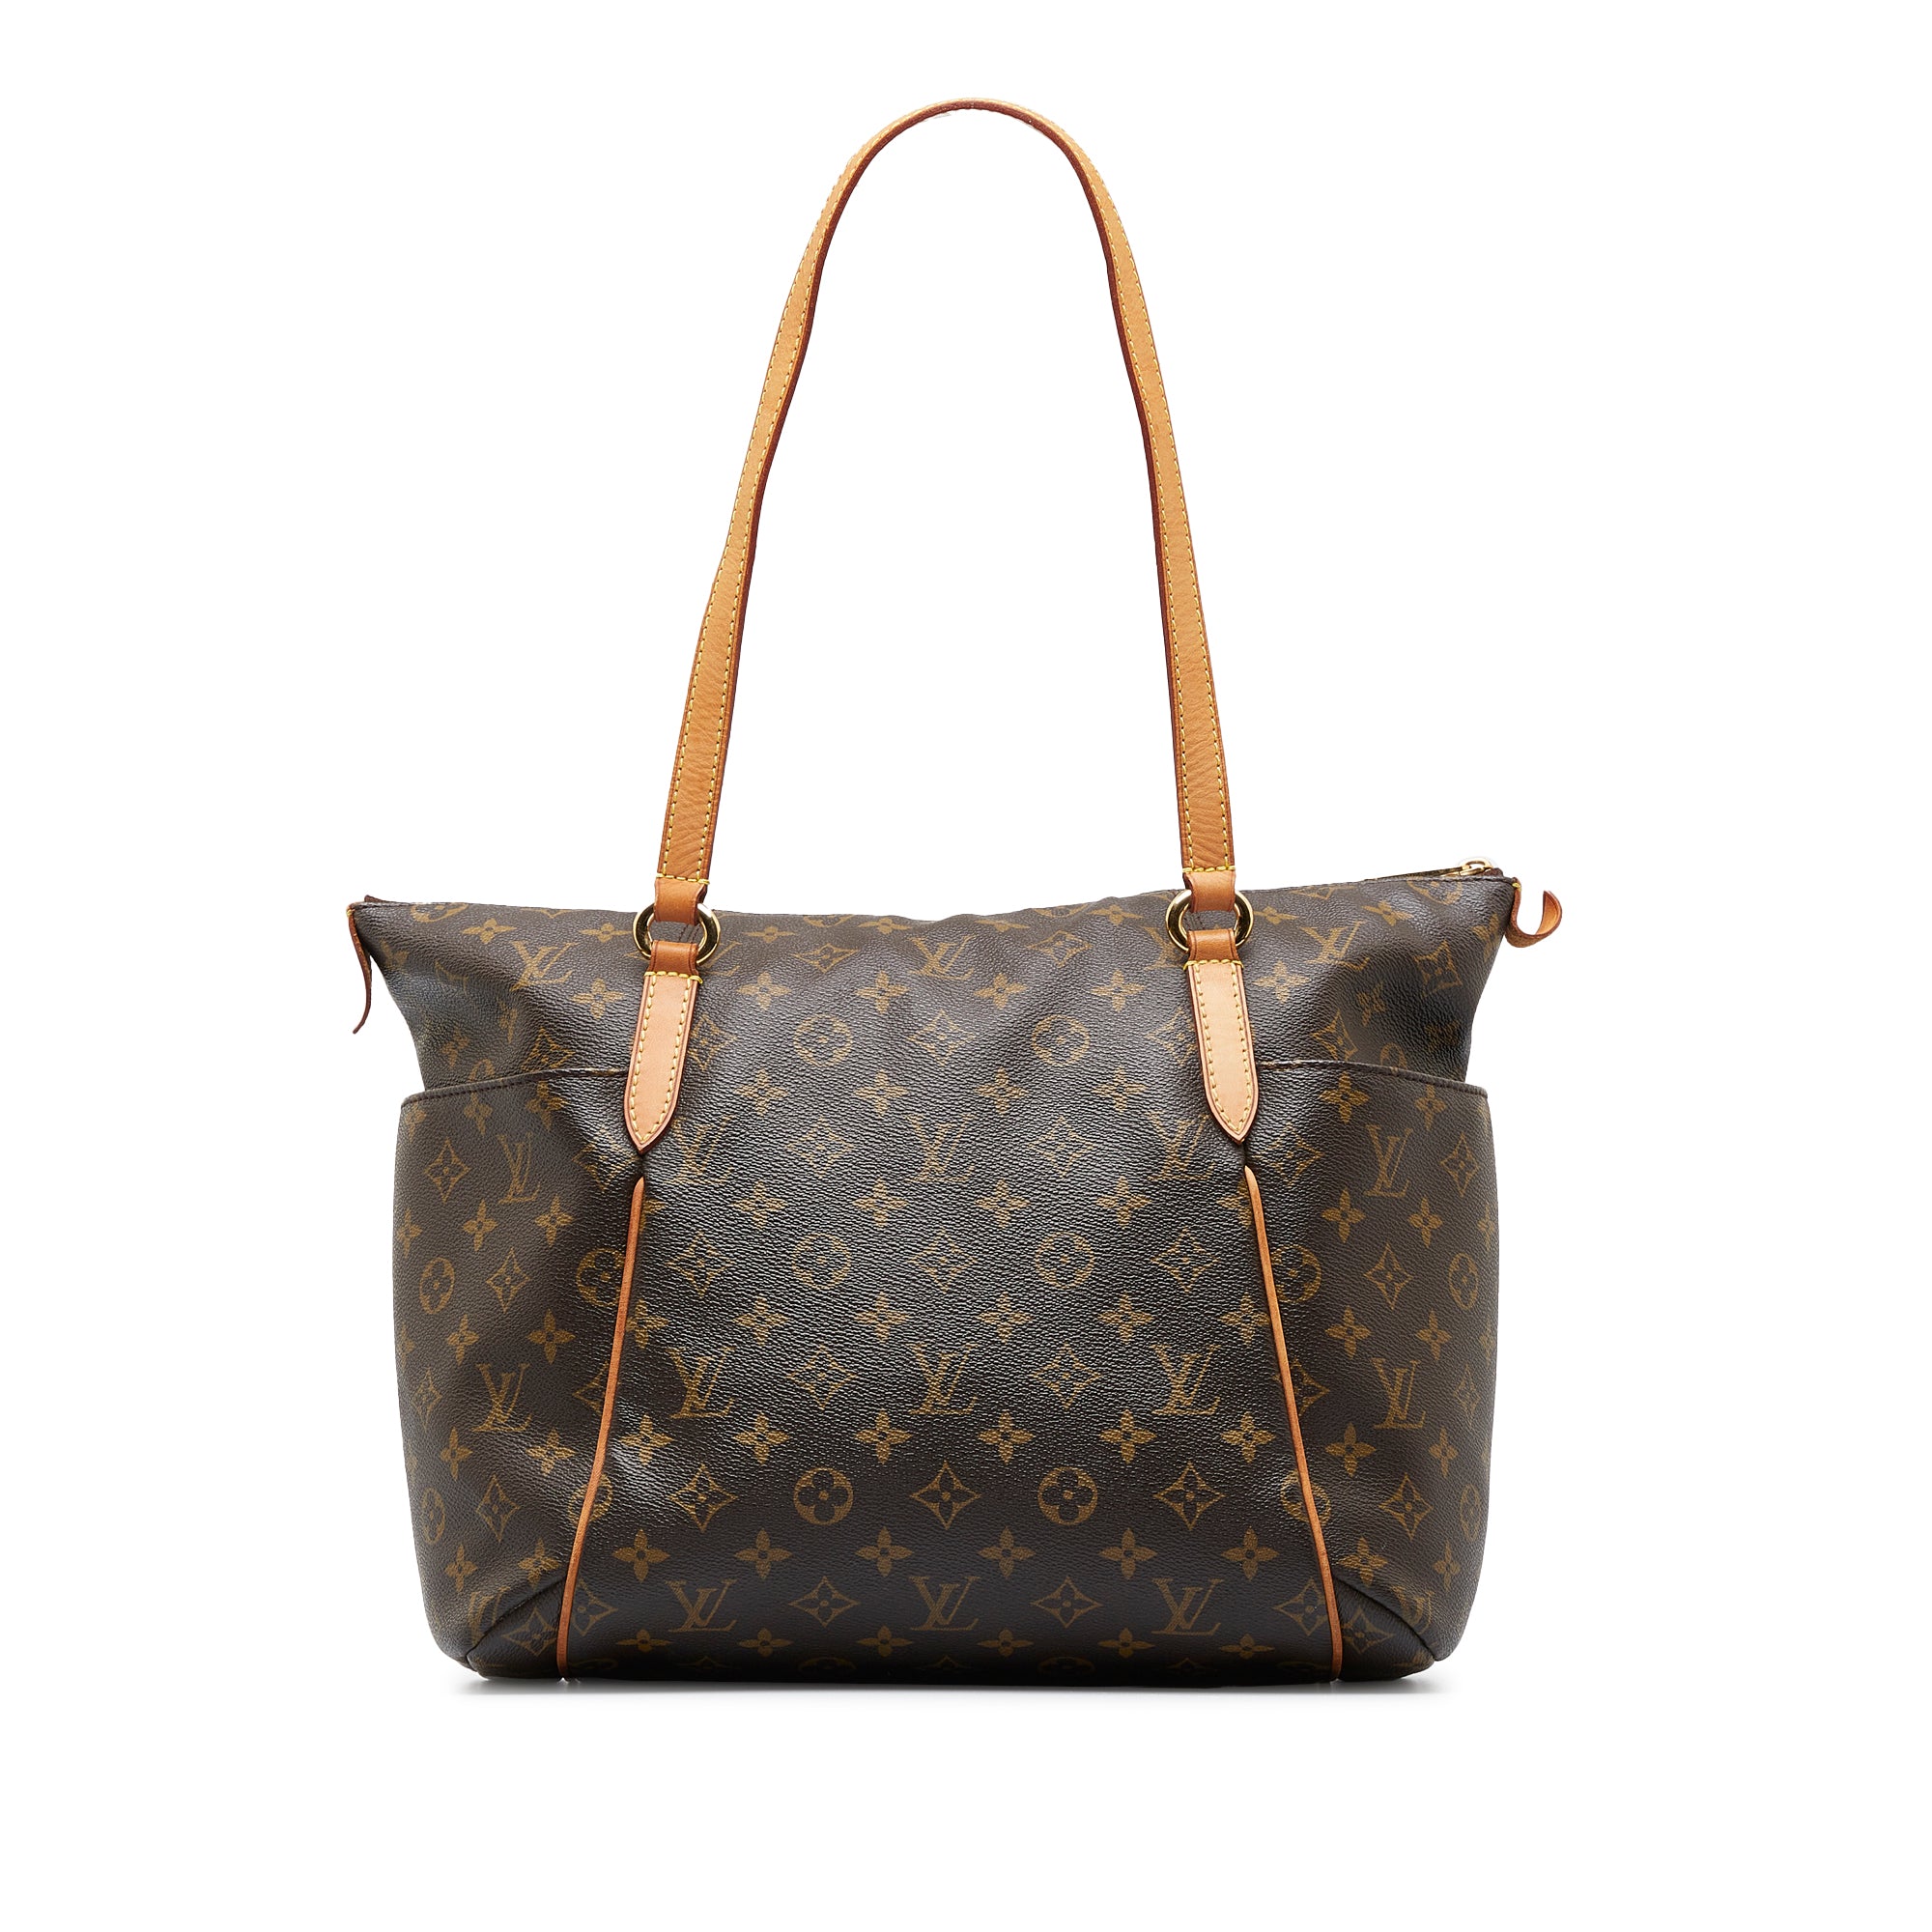 Authentic Louis Vuitton Totally MM Monogram Shoulder bag tote bag